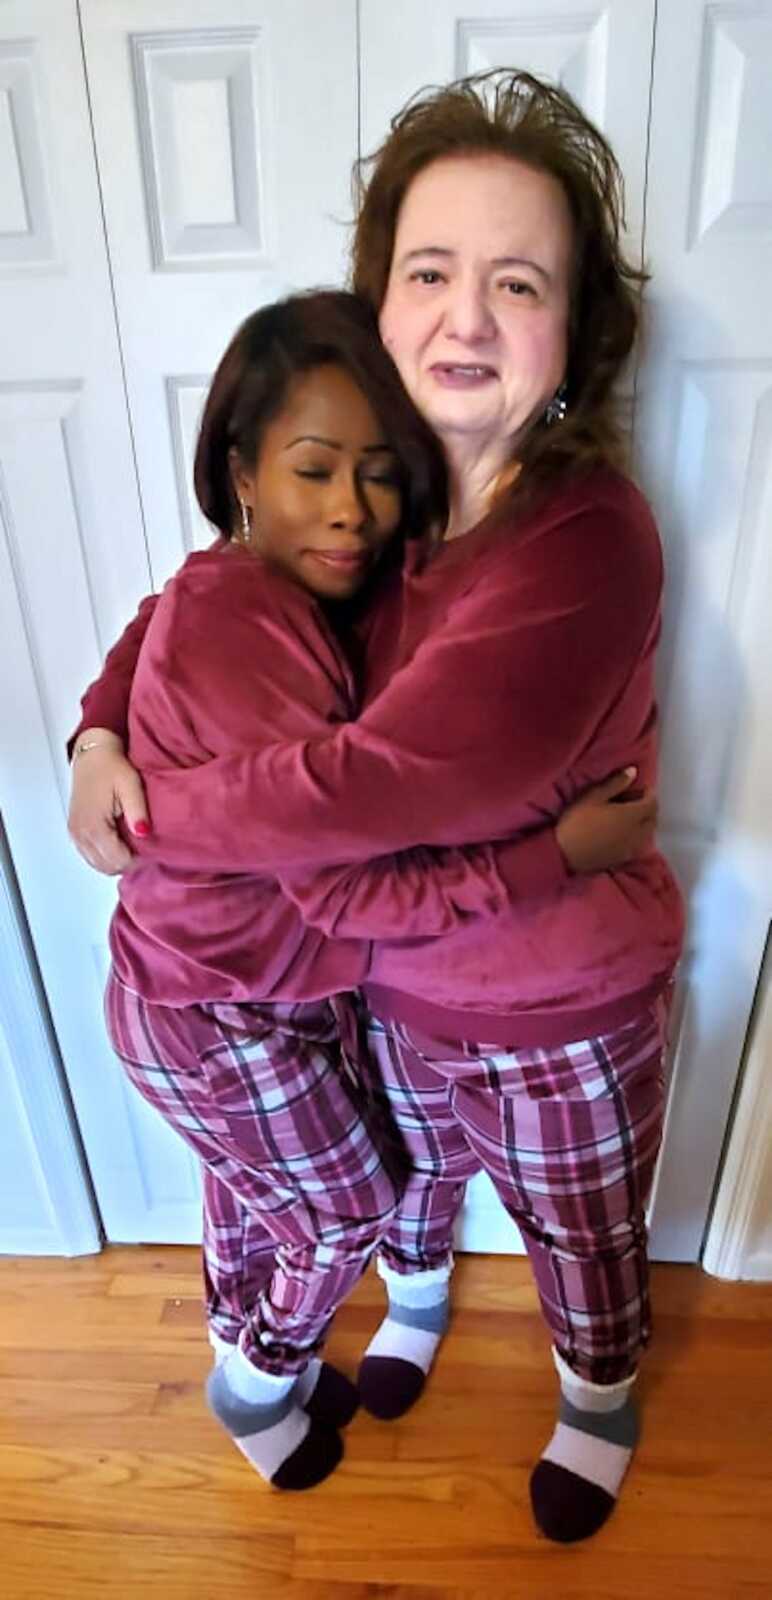 Adoptive mother and daughter wearing matching pajamas and embracing.